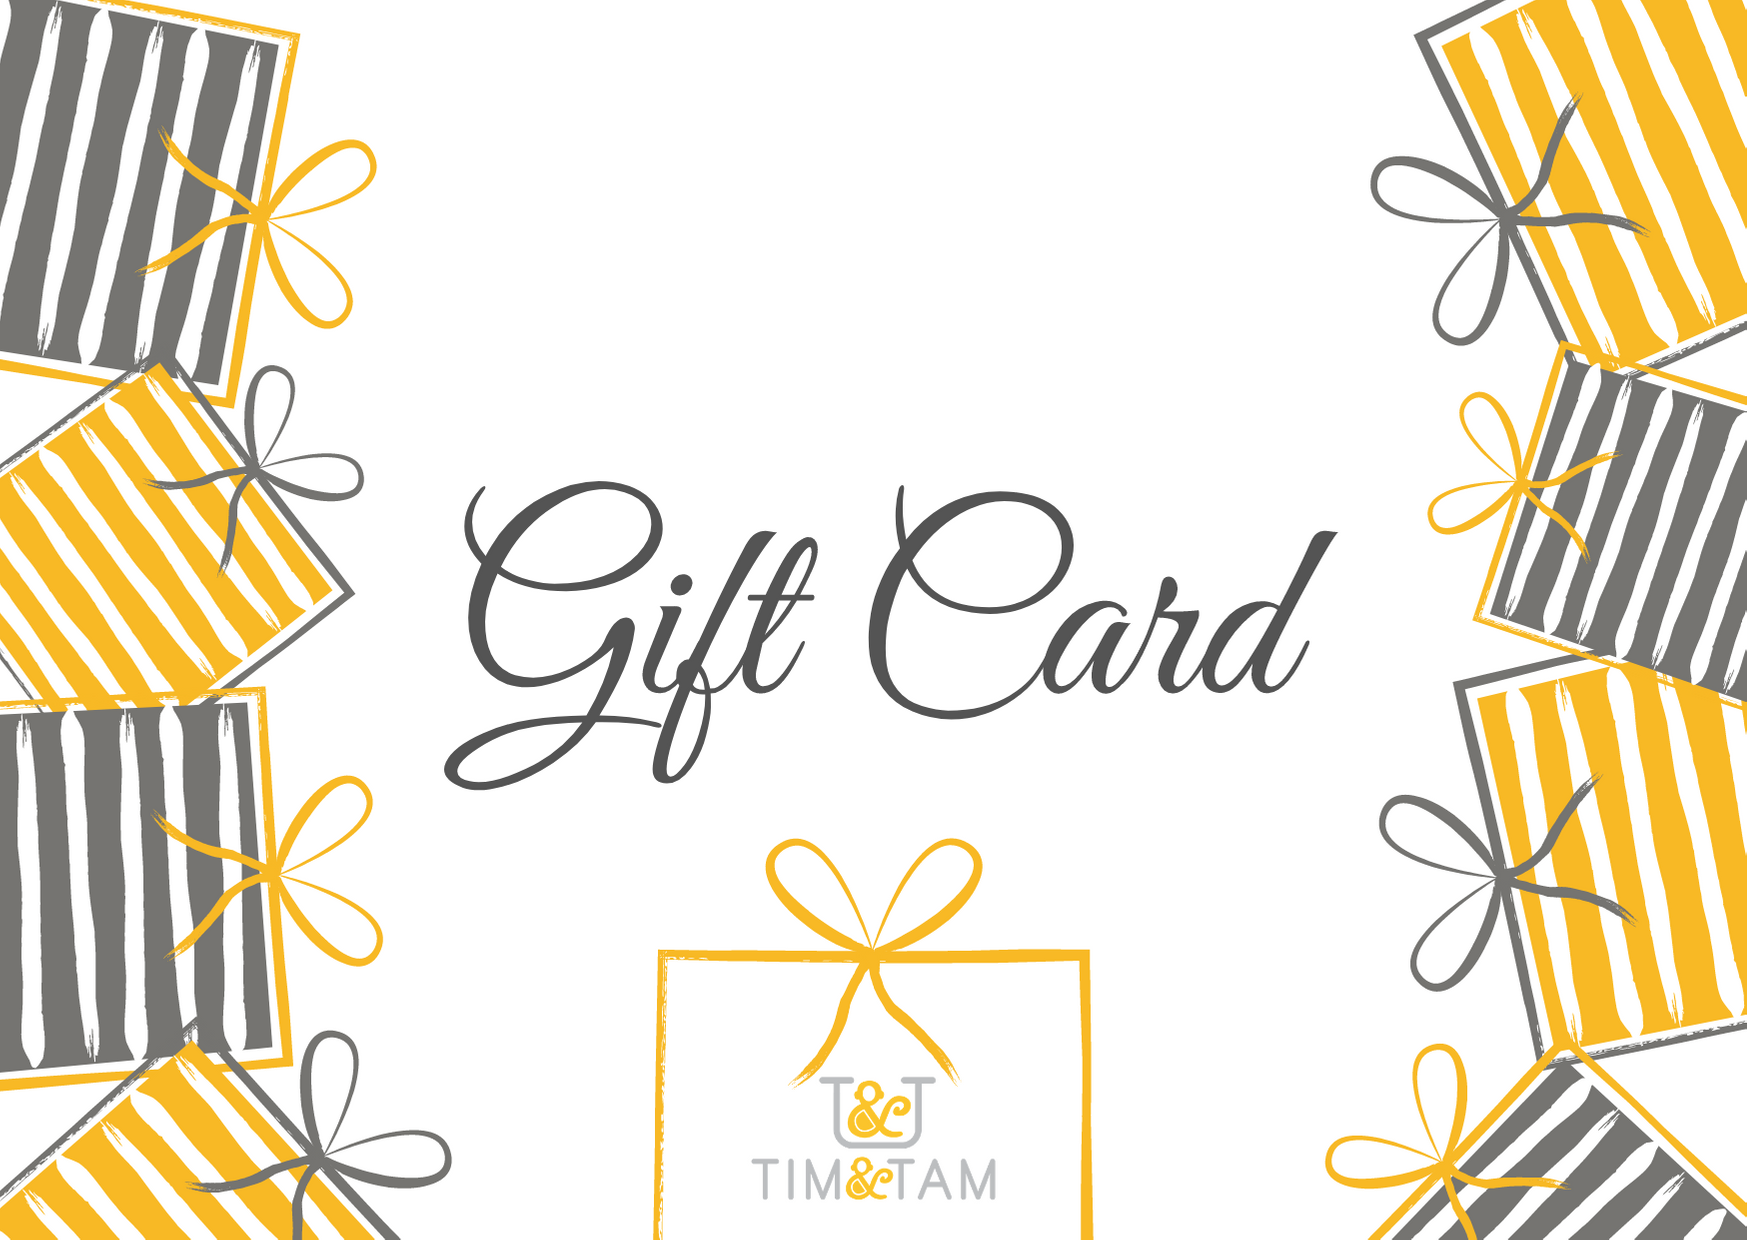 Tim & Tam Gift Cards